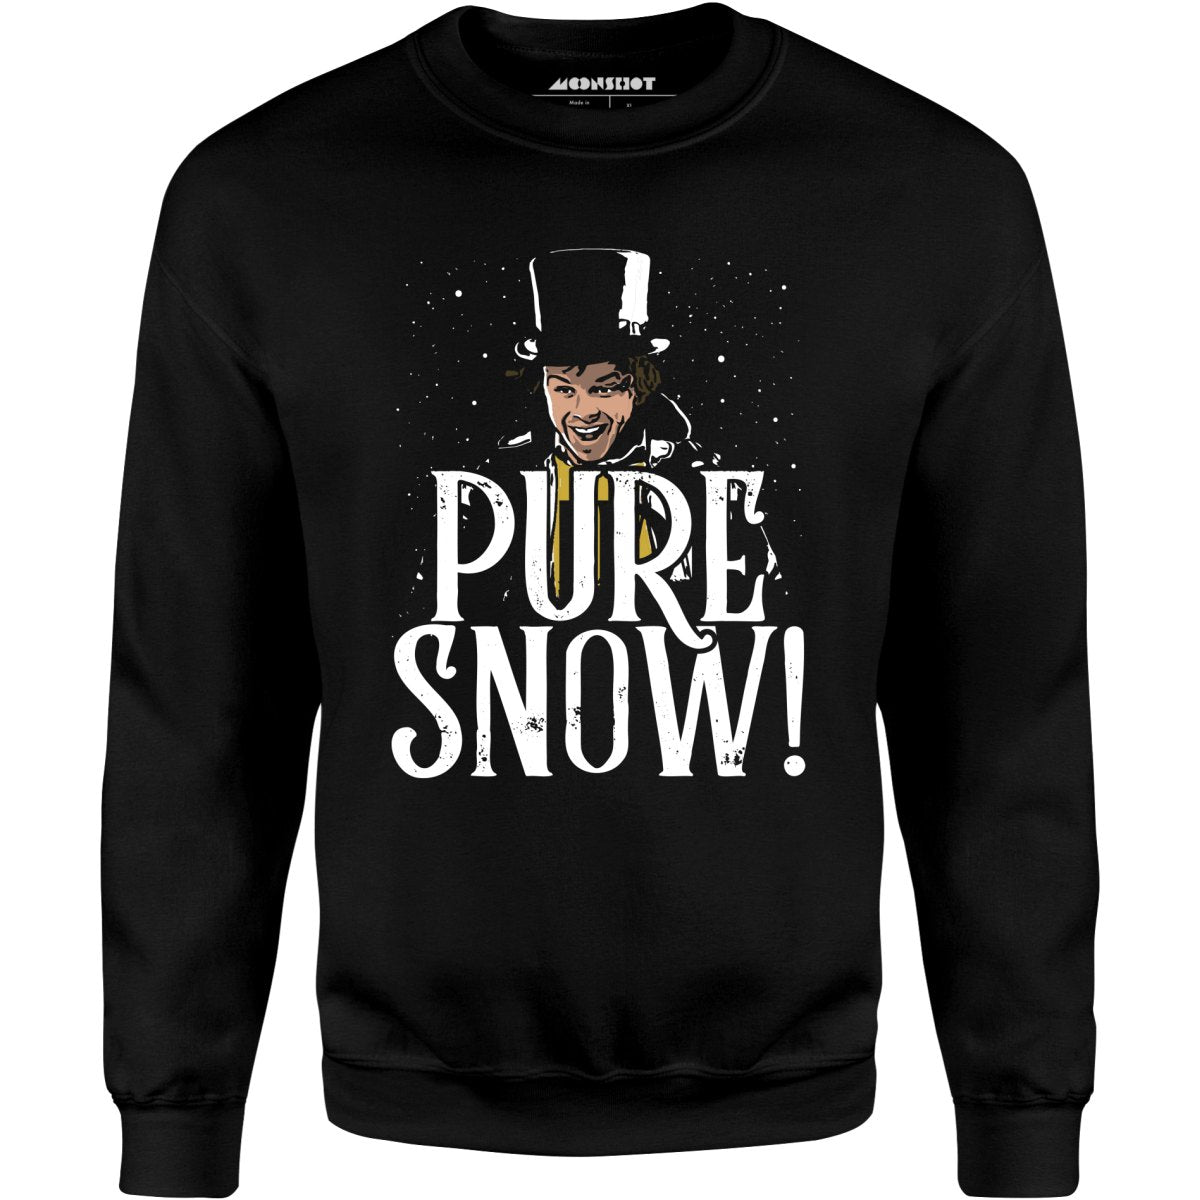 Charles DeMar - Pure Snow! - Unisex Sweatshirt